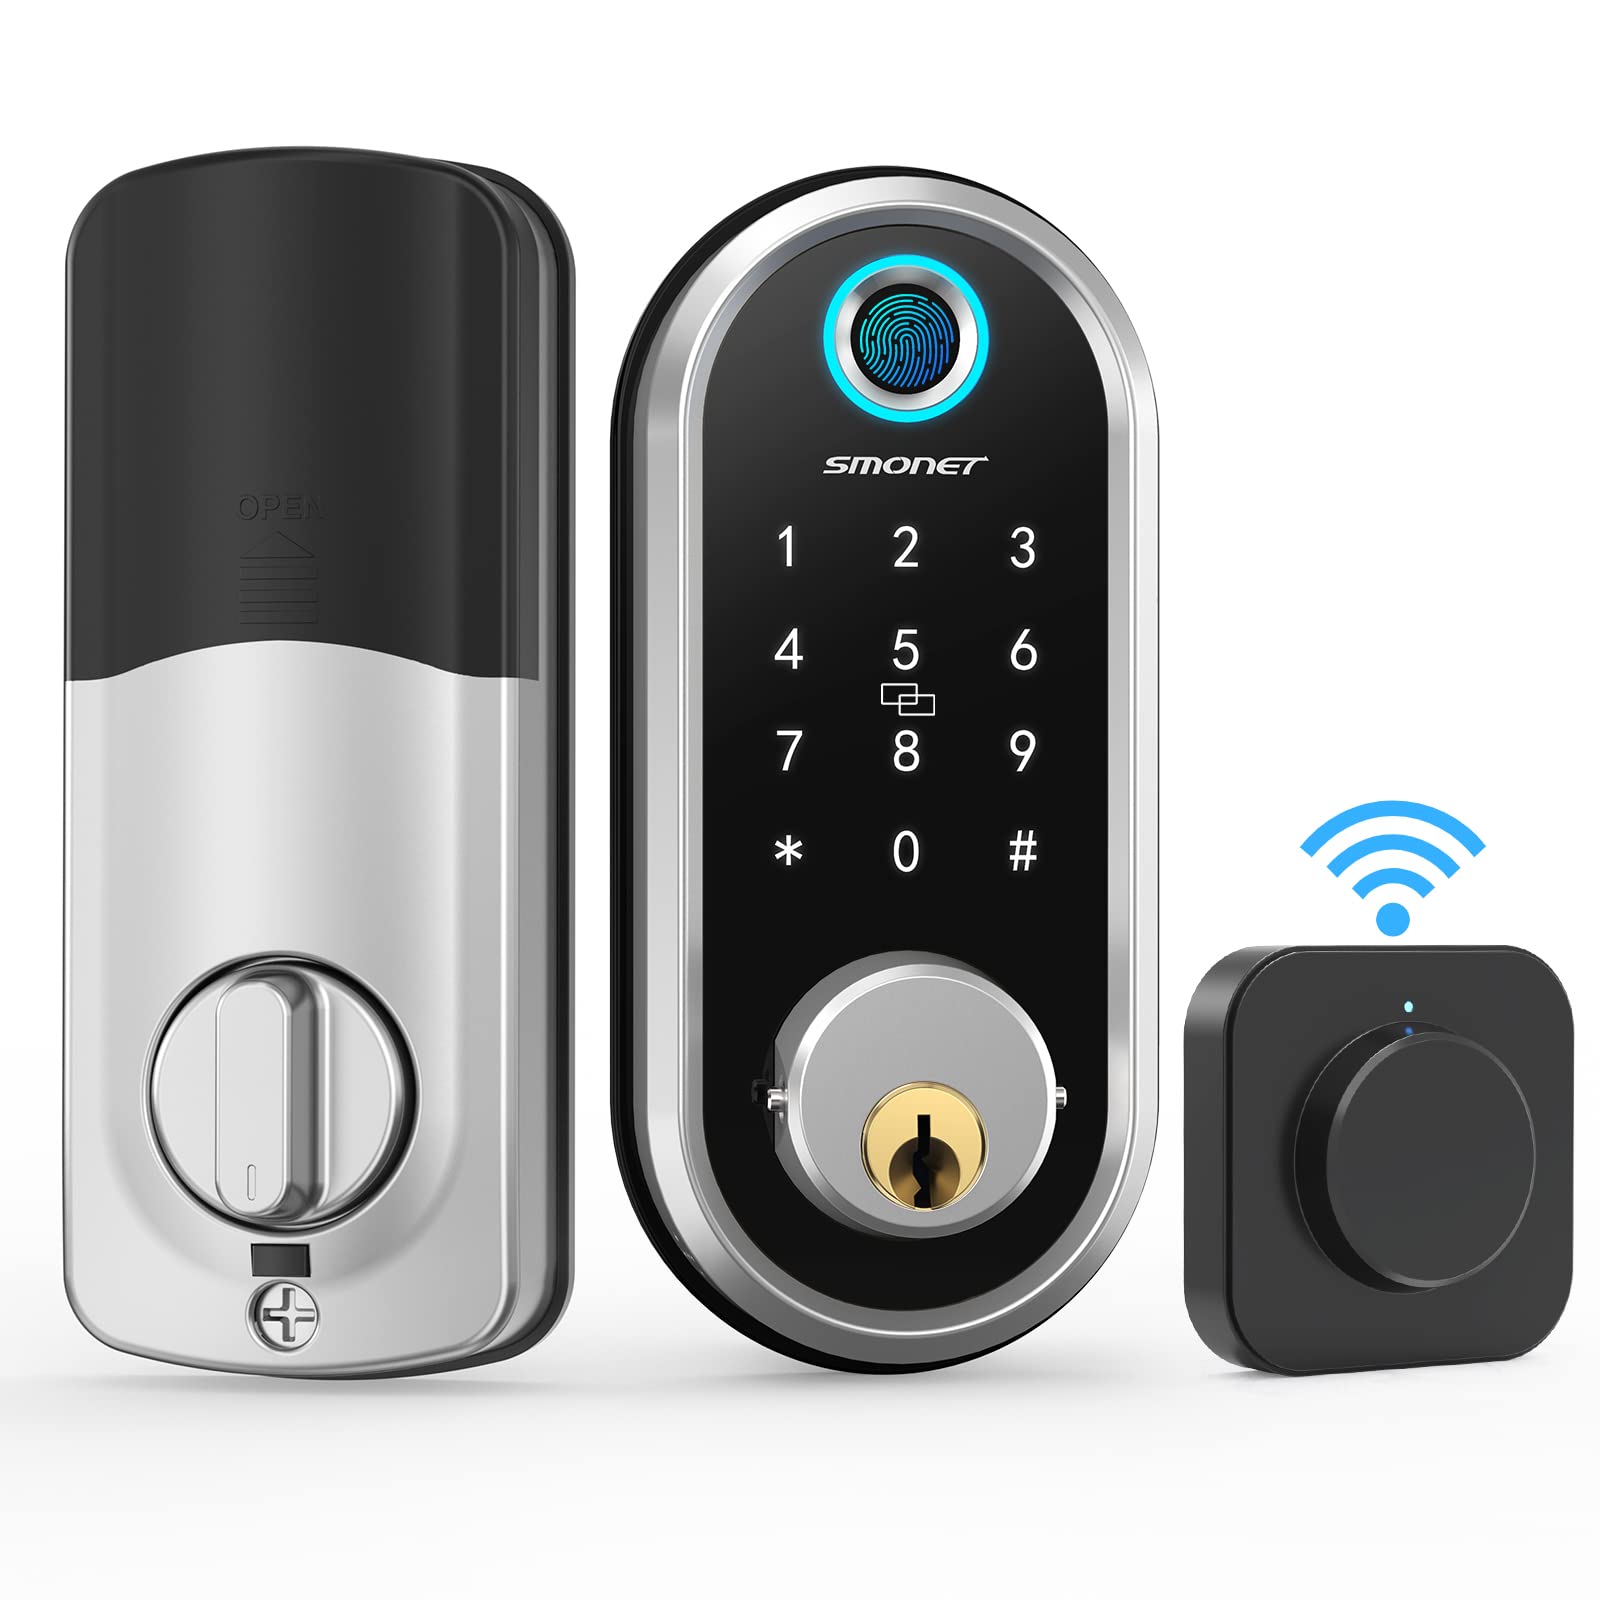 Smart Deadbolt, SMONET Fingerprint Electronic Deadbolt WiFi Door Lock with Keypad-Bluetooth Keyless Entry Keypad Smart Deadbolt App Control, Ekeys Sharing, Auto Lock for Homes and Hotel(with Gateway)